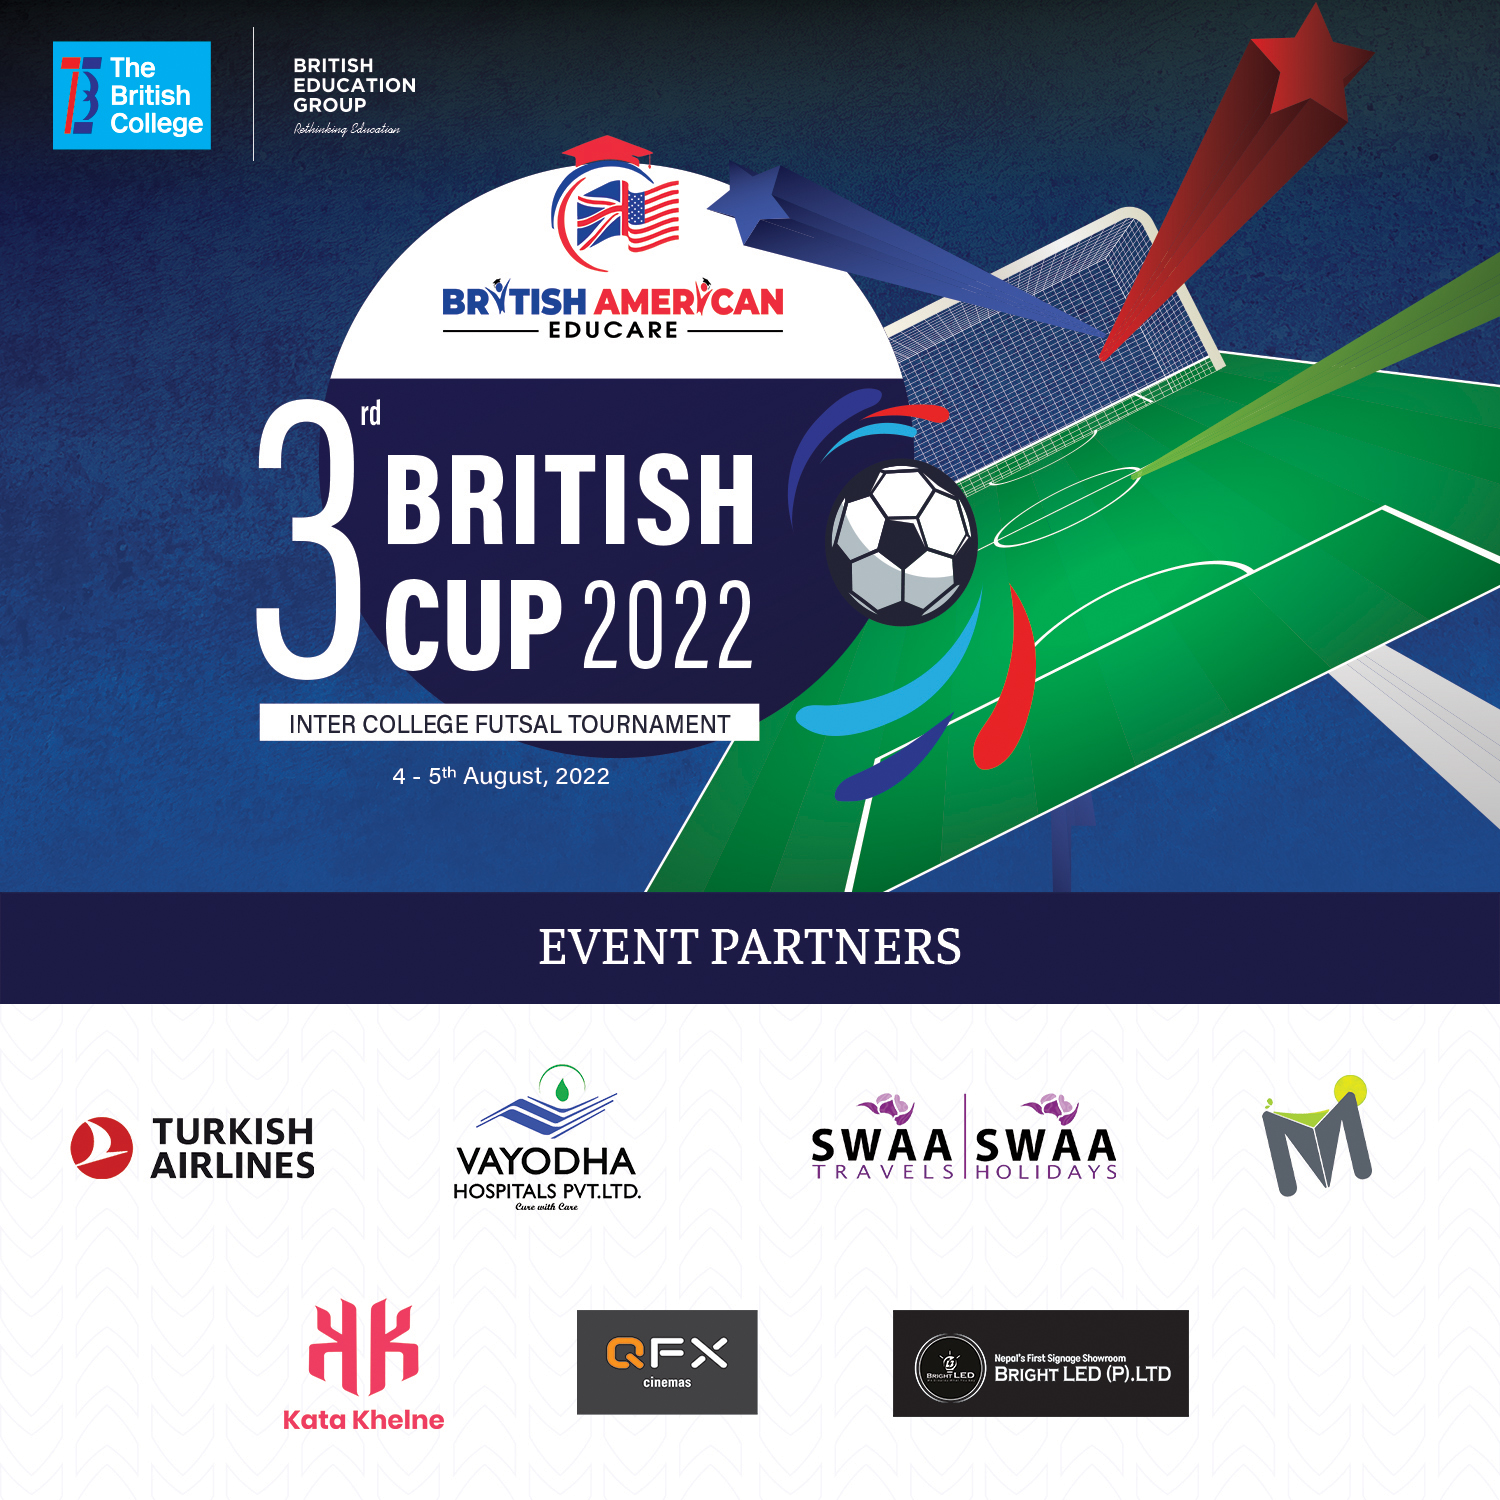 3rd British Cup 2022 | Inter College Futsal Tournament